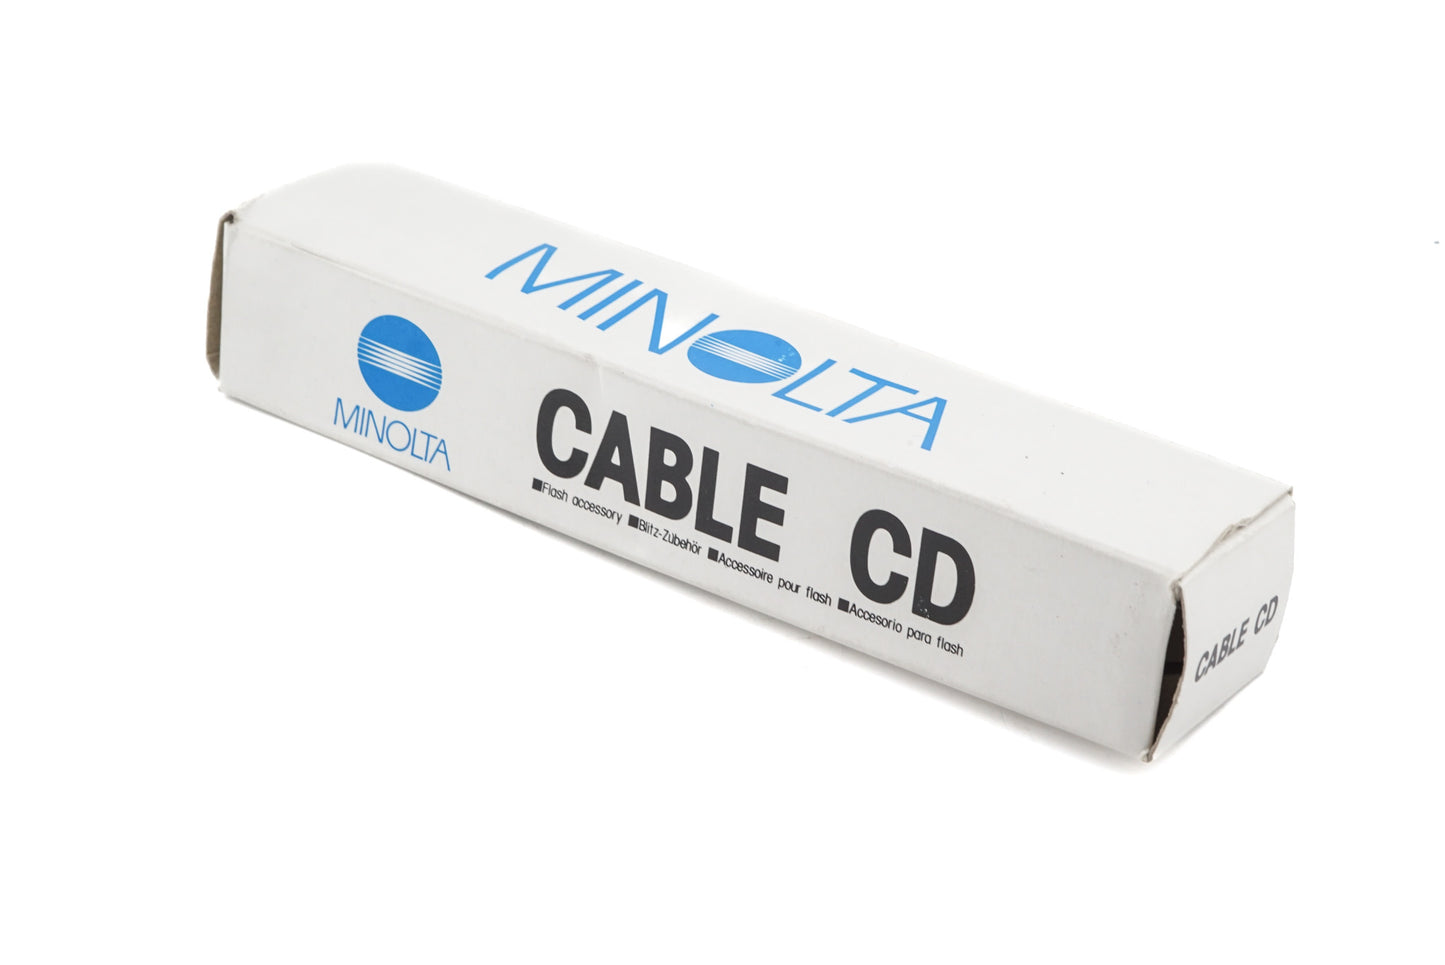 Minolta Cable CD